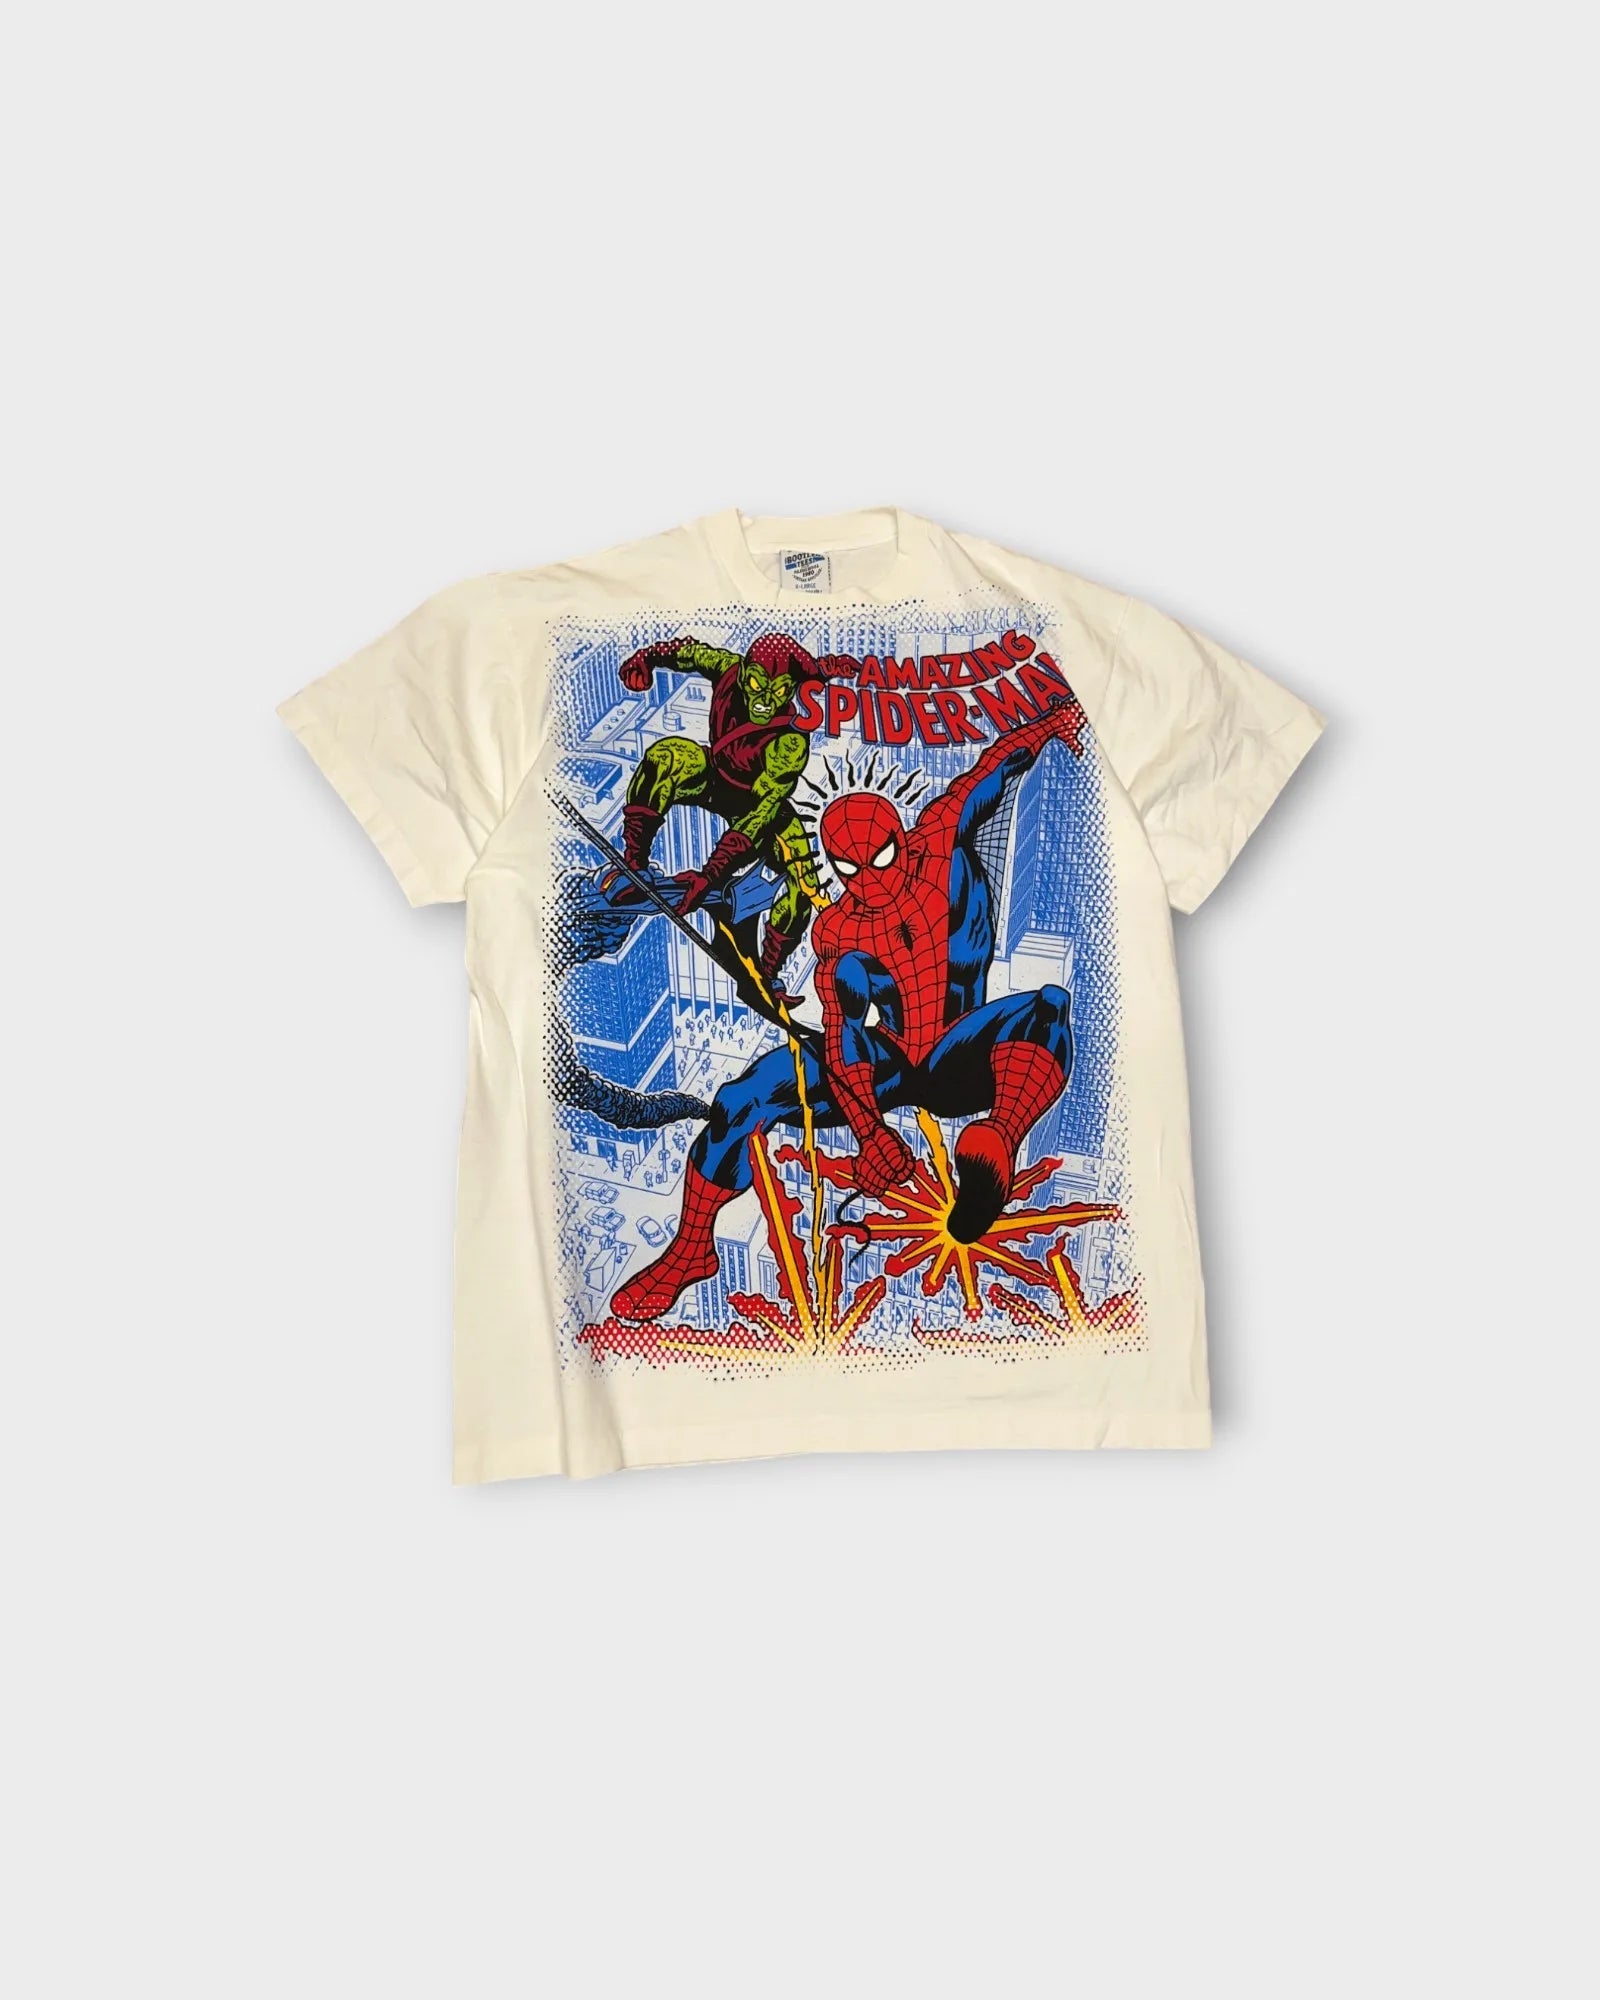 Vintage Bootleg Spiderman T-shirt - XL